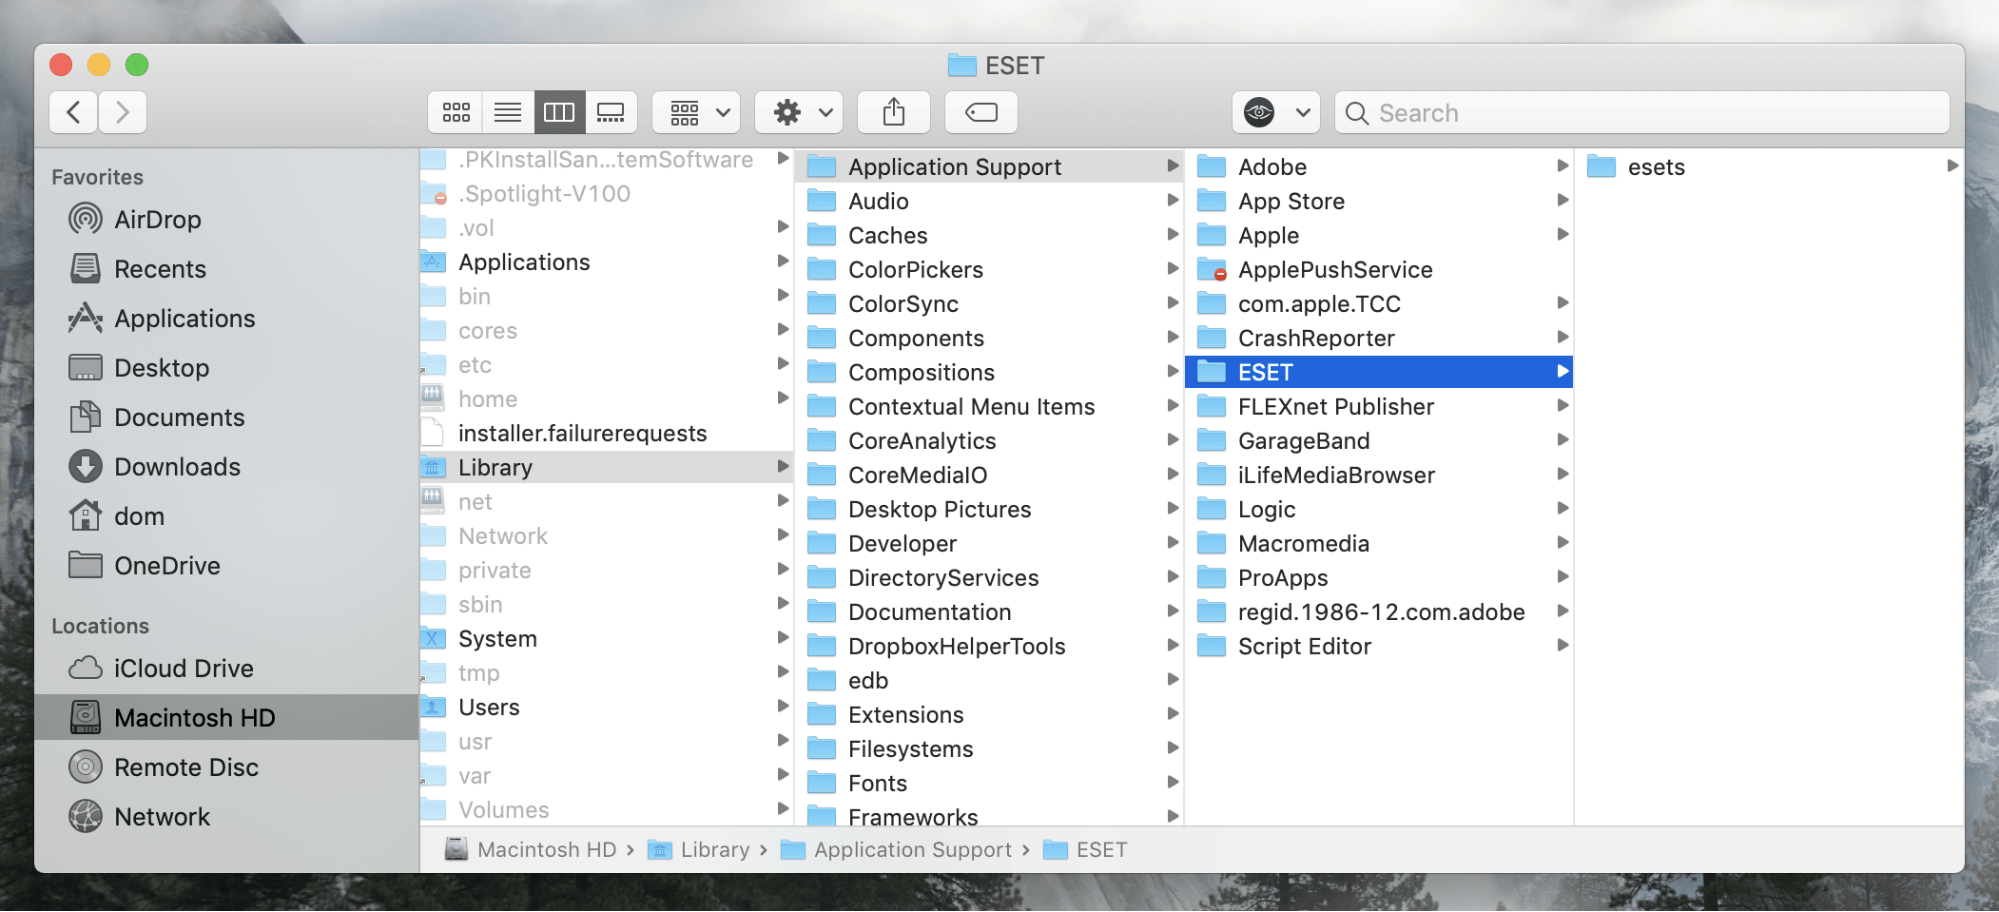 download the new for mac ESET Uninstaller 10.39.2.0